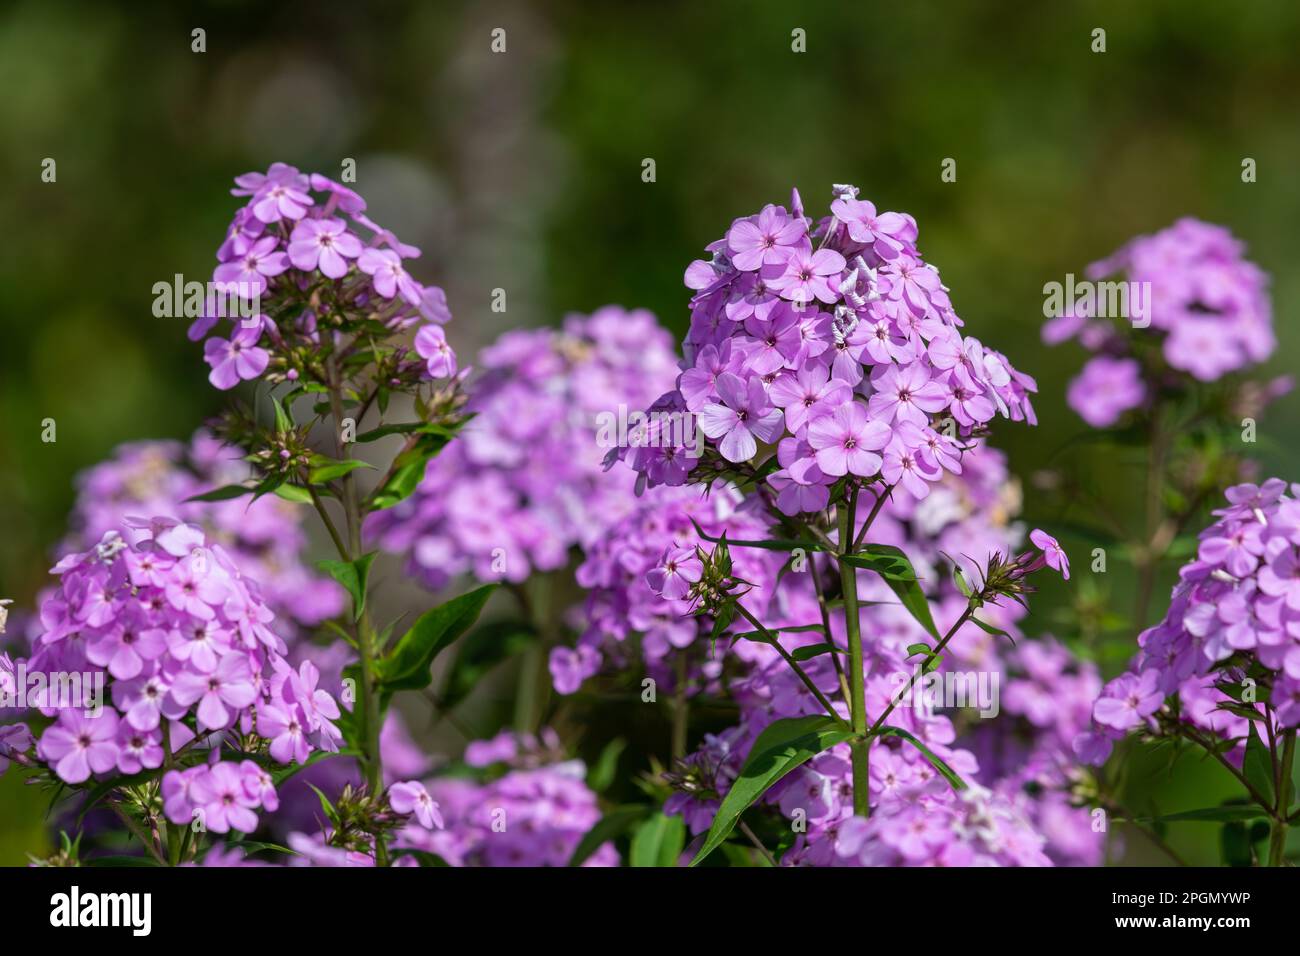 Close up of pink garden phlox (phlox paniculata) flowers in bloom Stock Photo